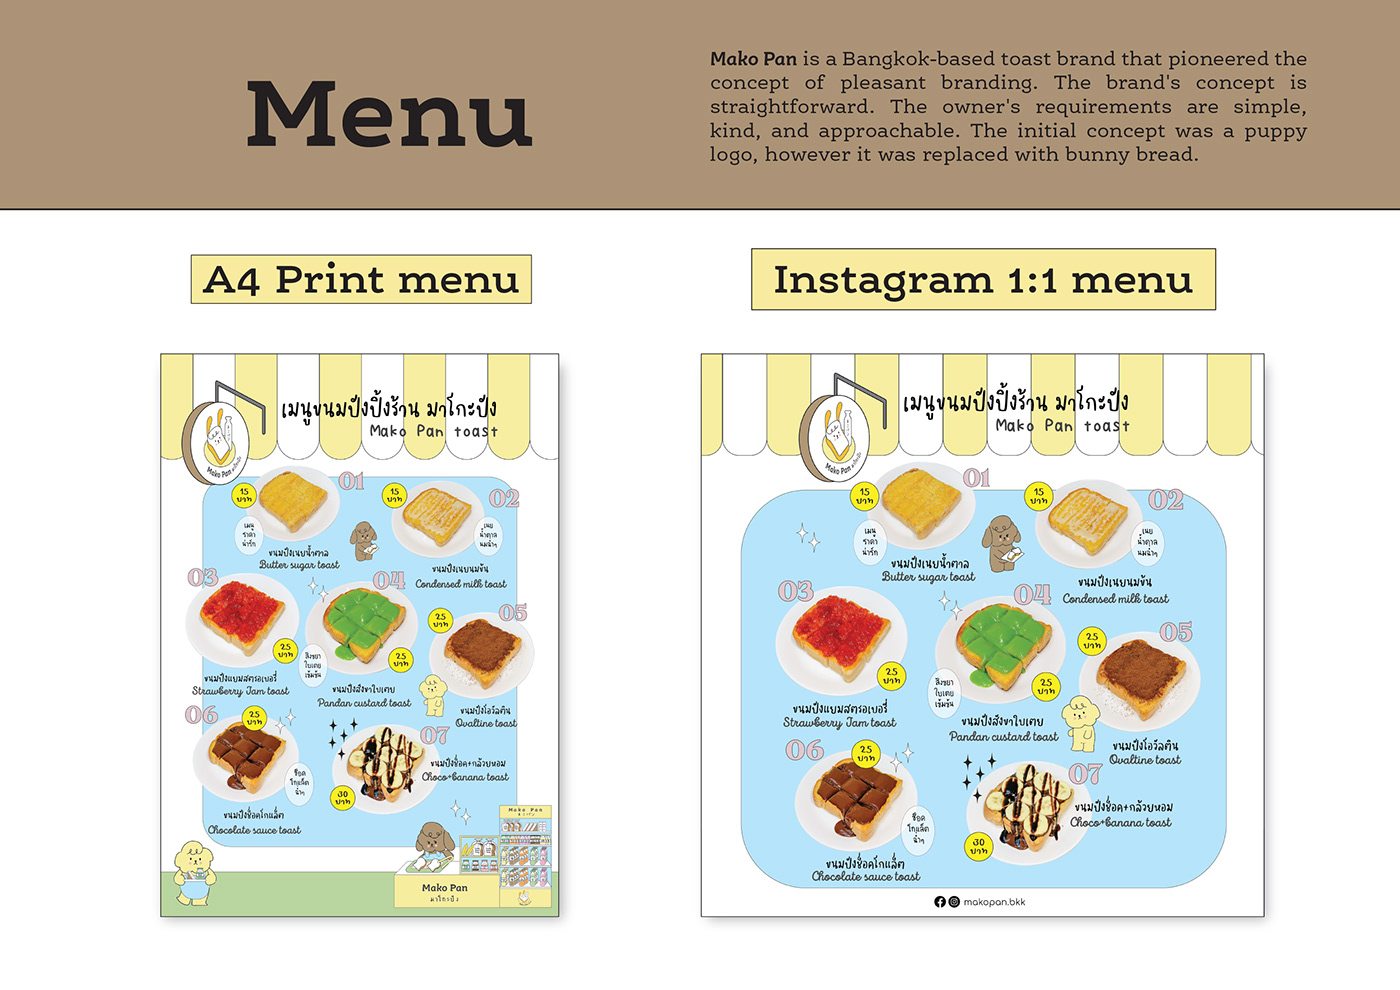 A4 prints menu and Instagram post 1:1